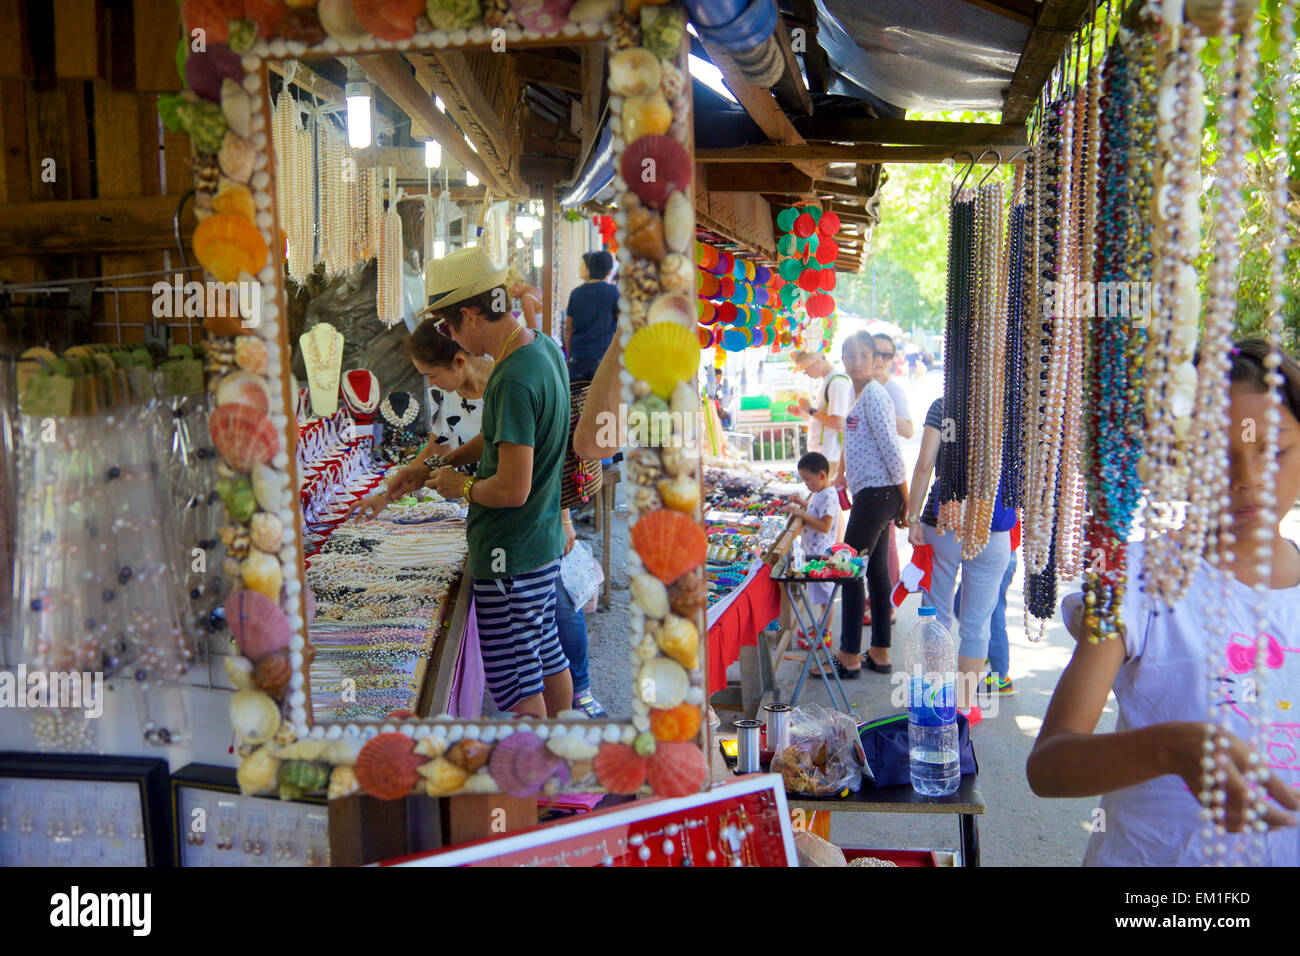 A market stalls  selling pearls and shells, Phuket Thailand Stock Photo